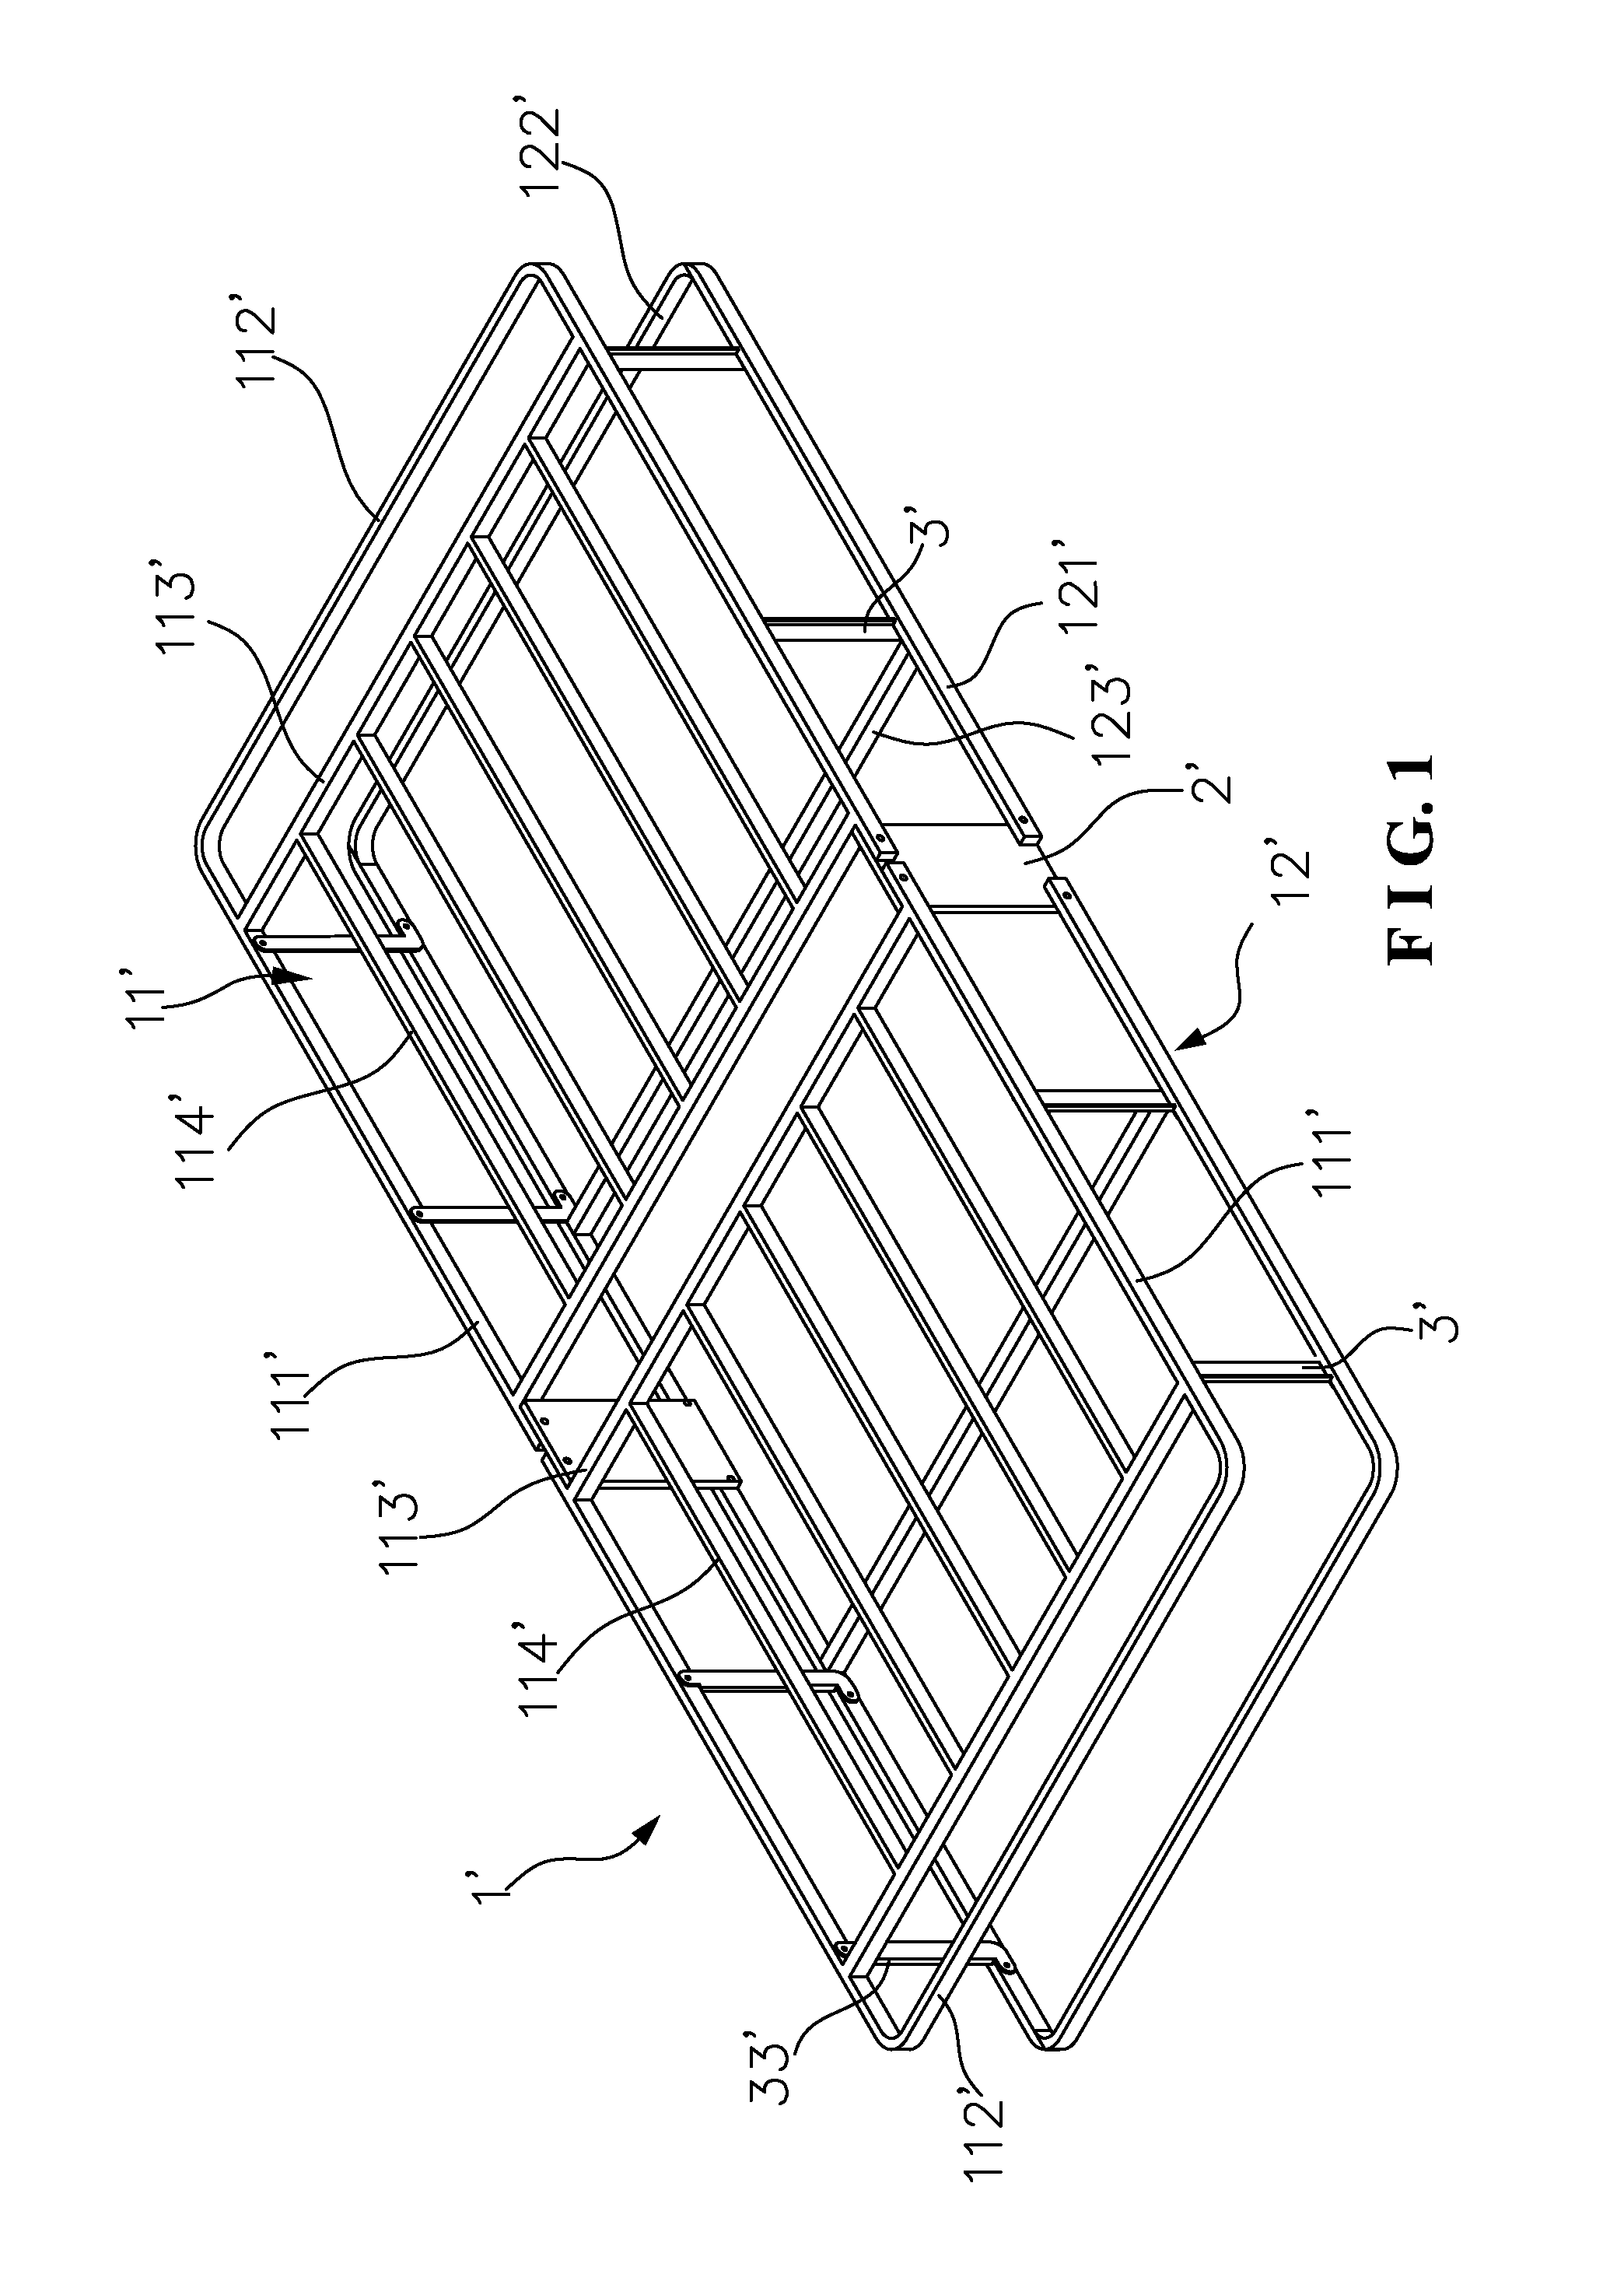 Bed frame connector